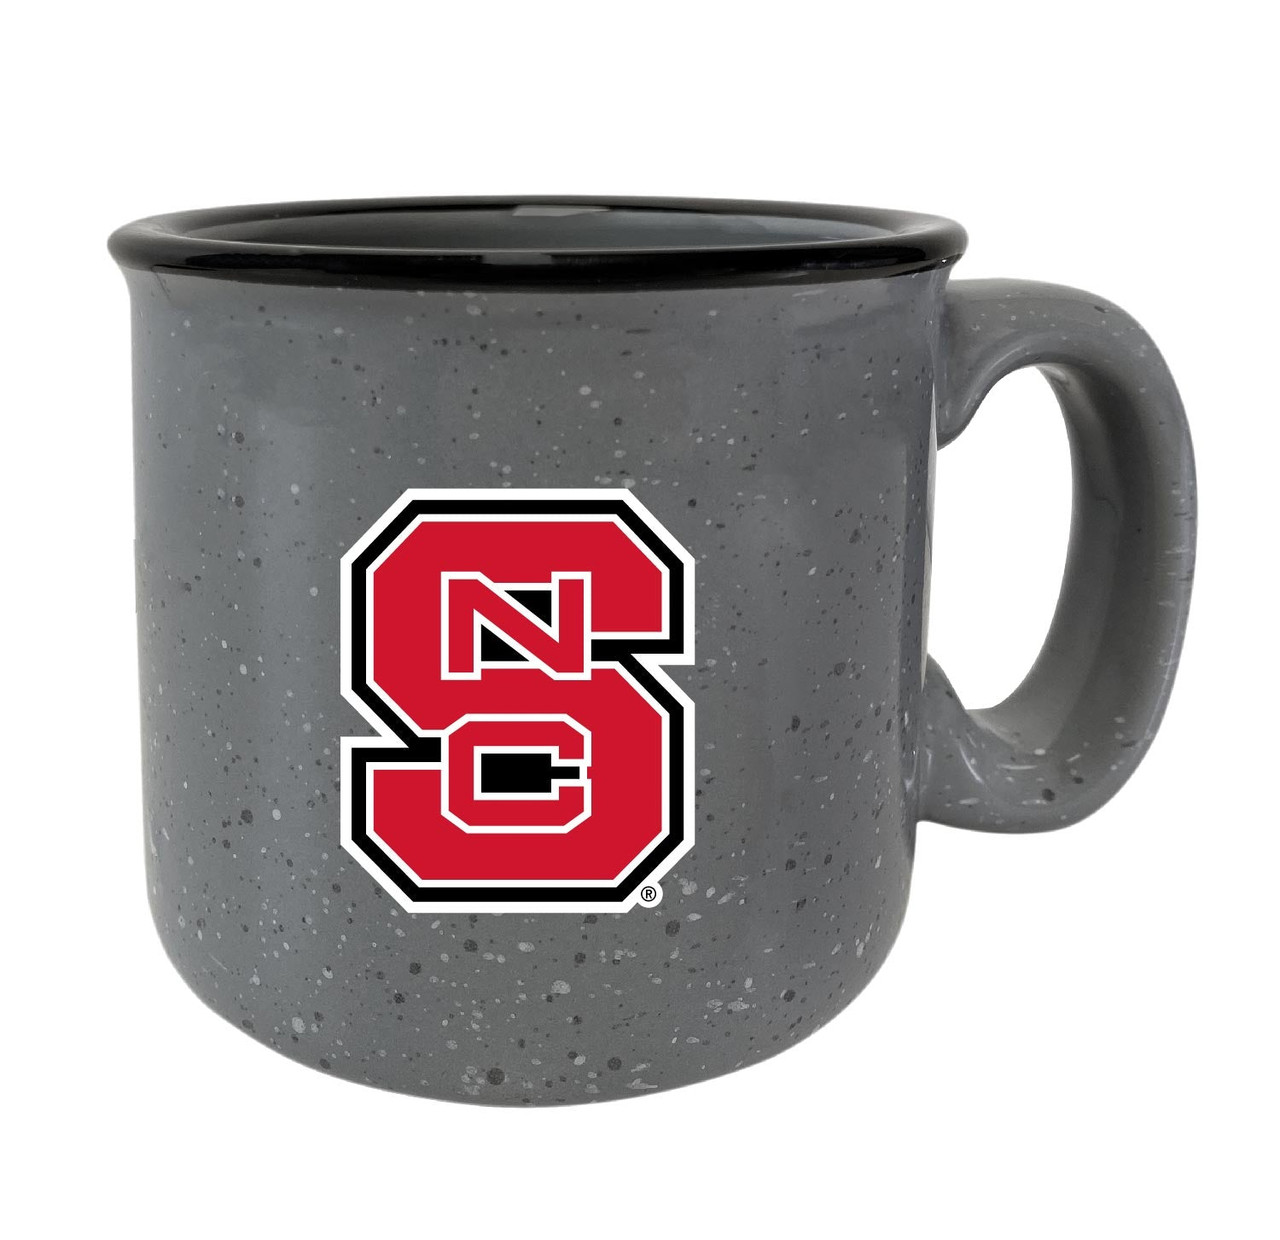 NC State Wolfpack 8 oz Speckled Ceramic Camper Coffee Mug (Gray).